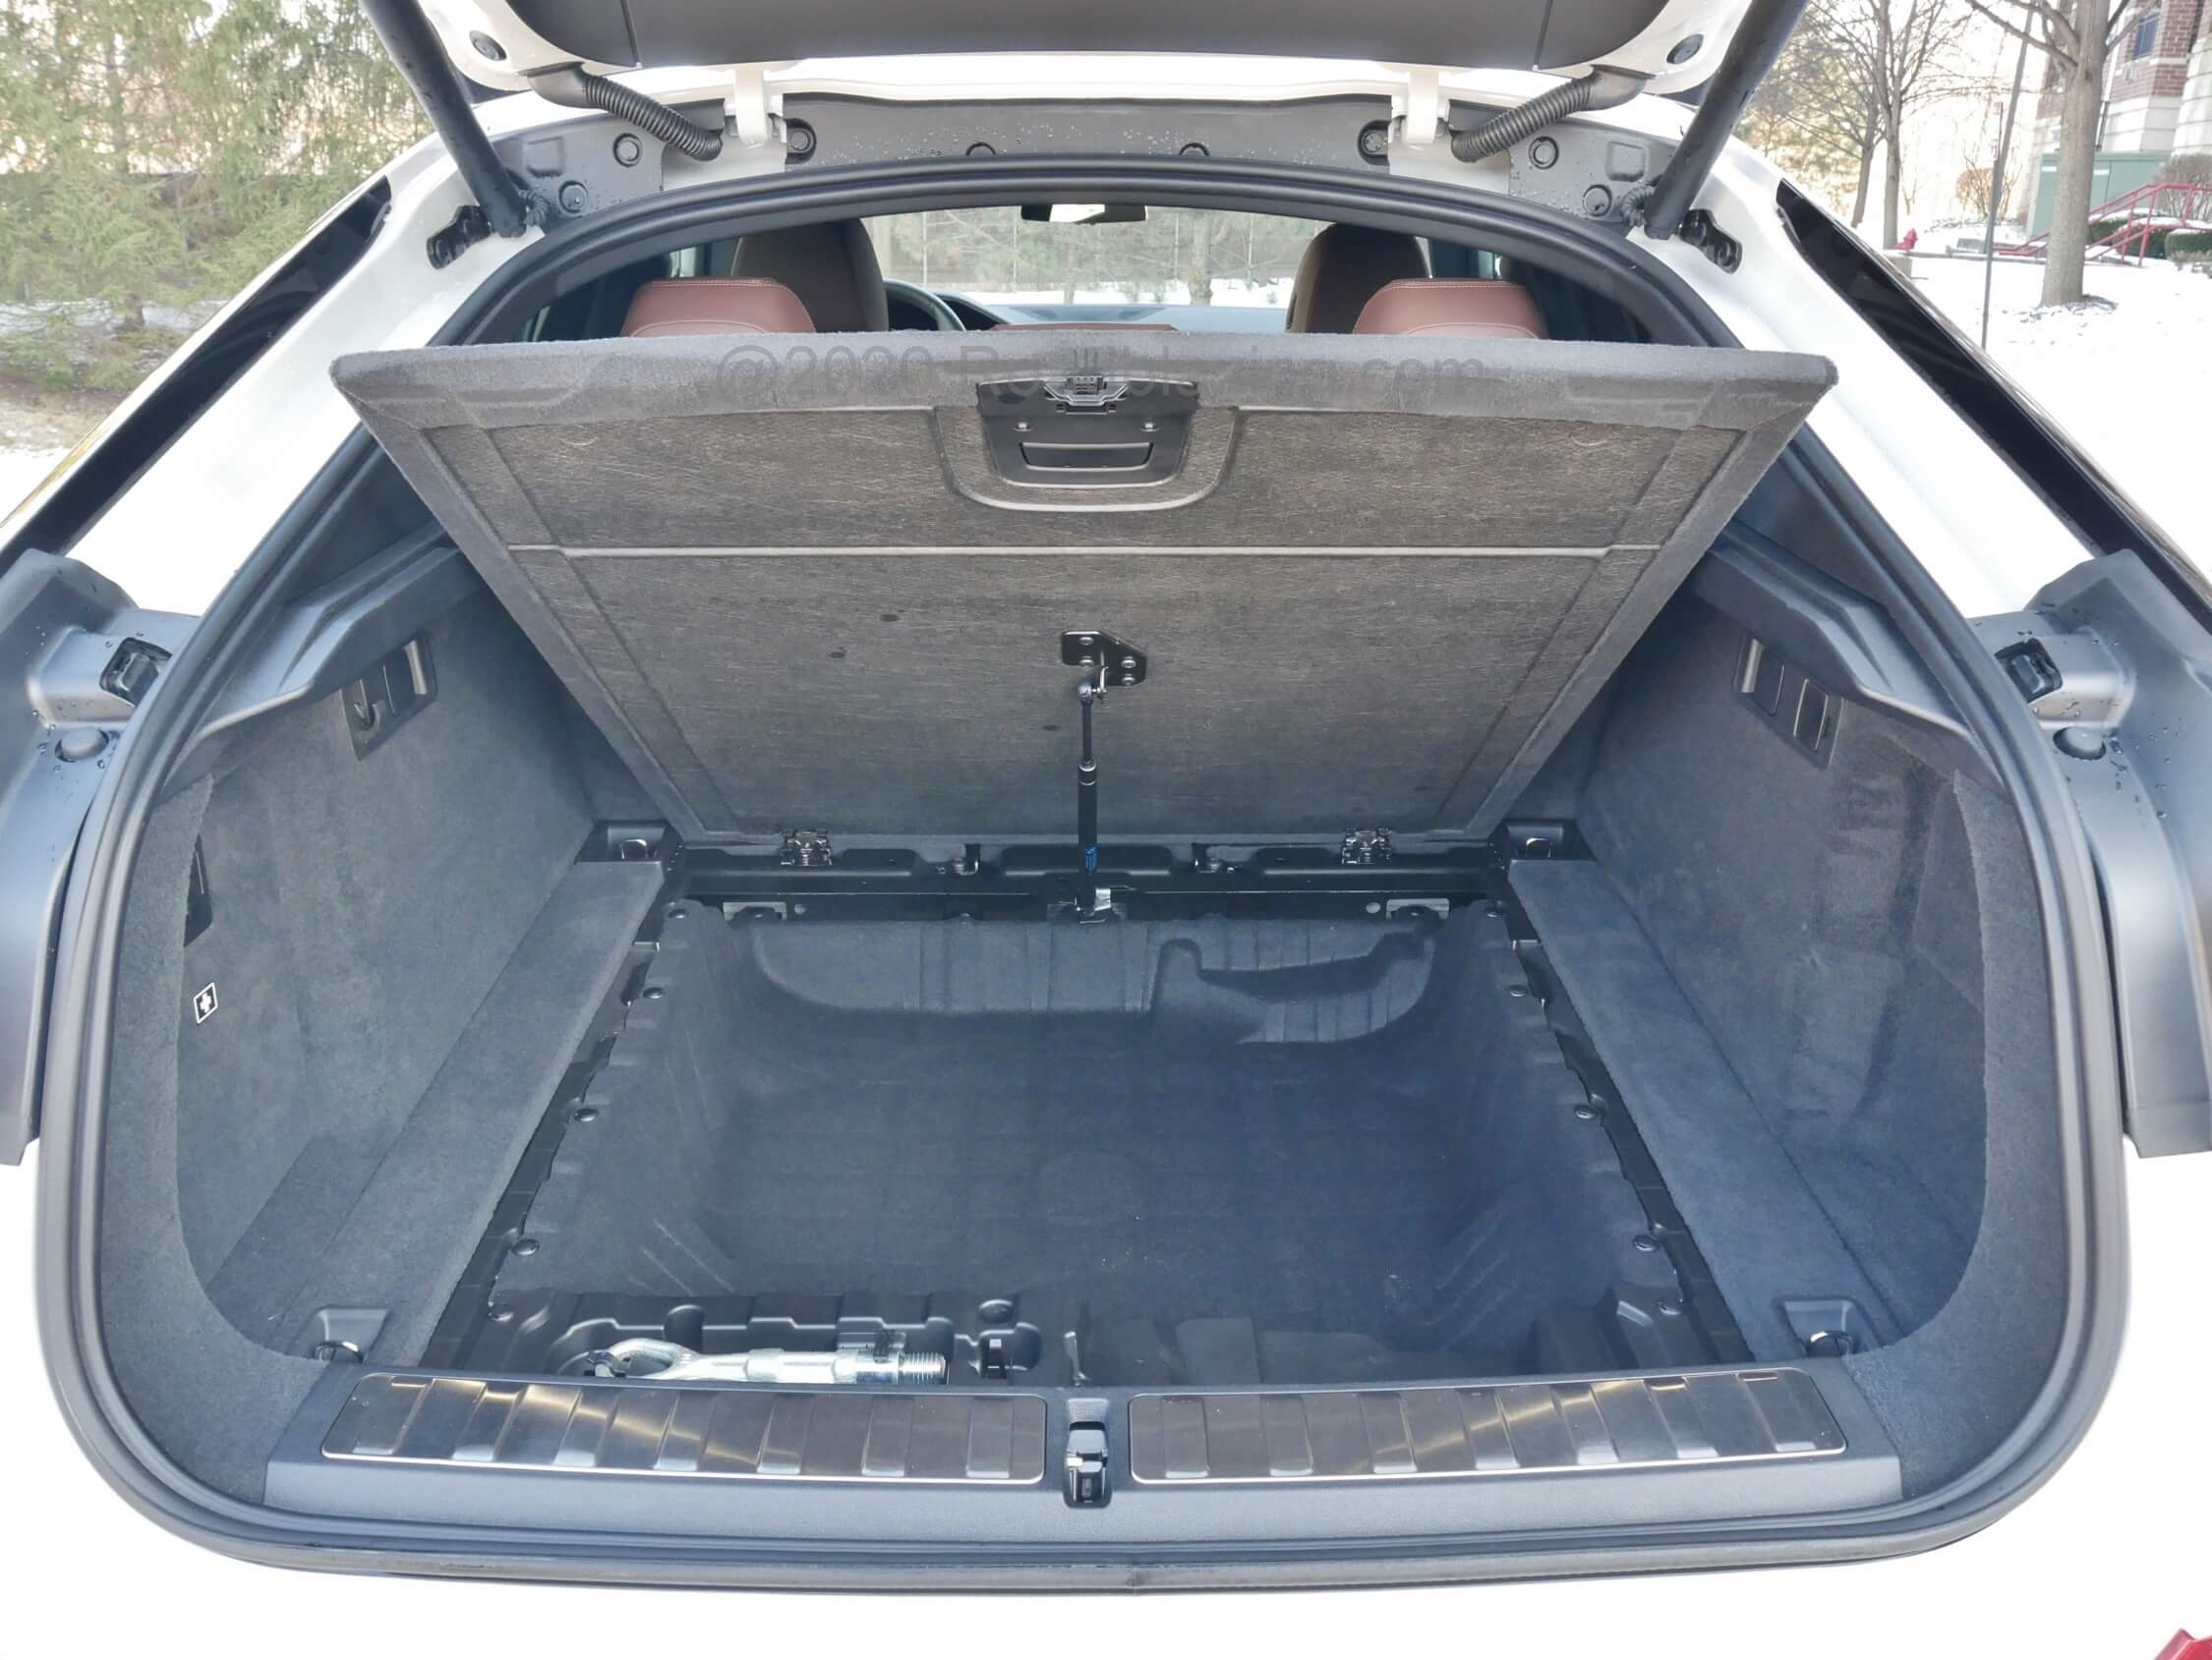 2020 BMW X6 xDrive 40i: Spring raised cargo floor conceals massive sub-floor storage space